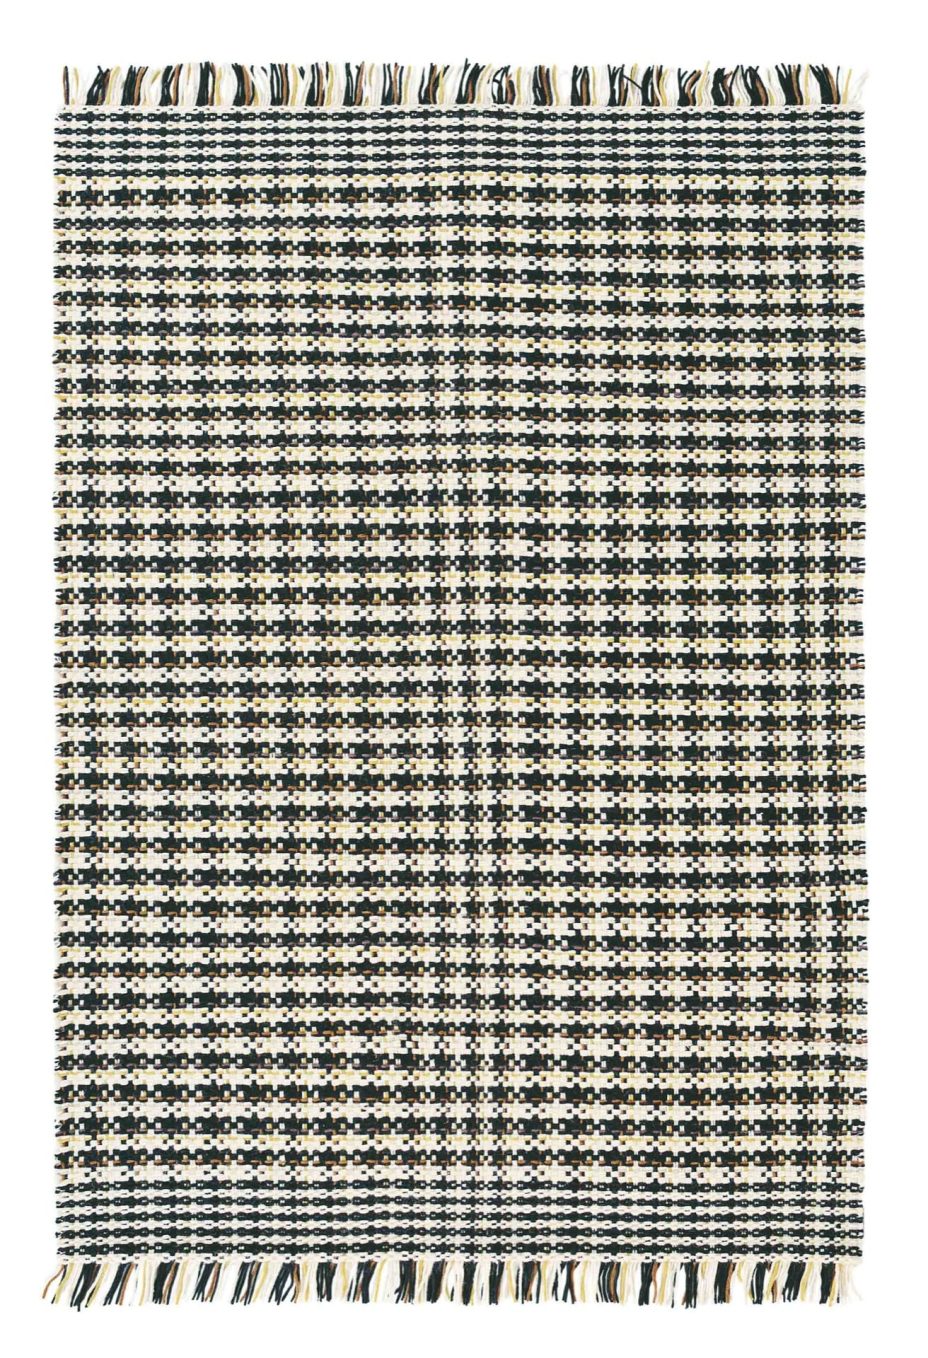 Atelier Coco 49903 rug by Brink